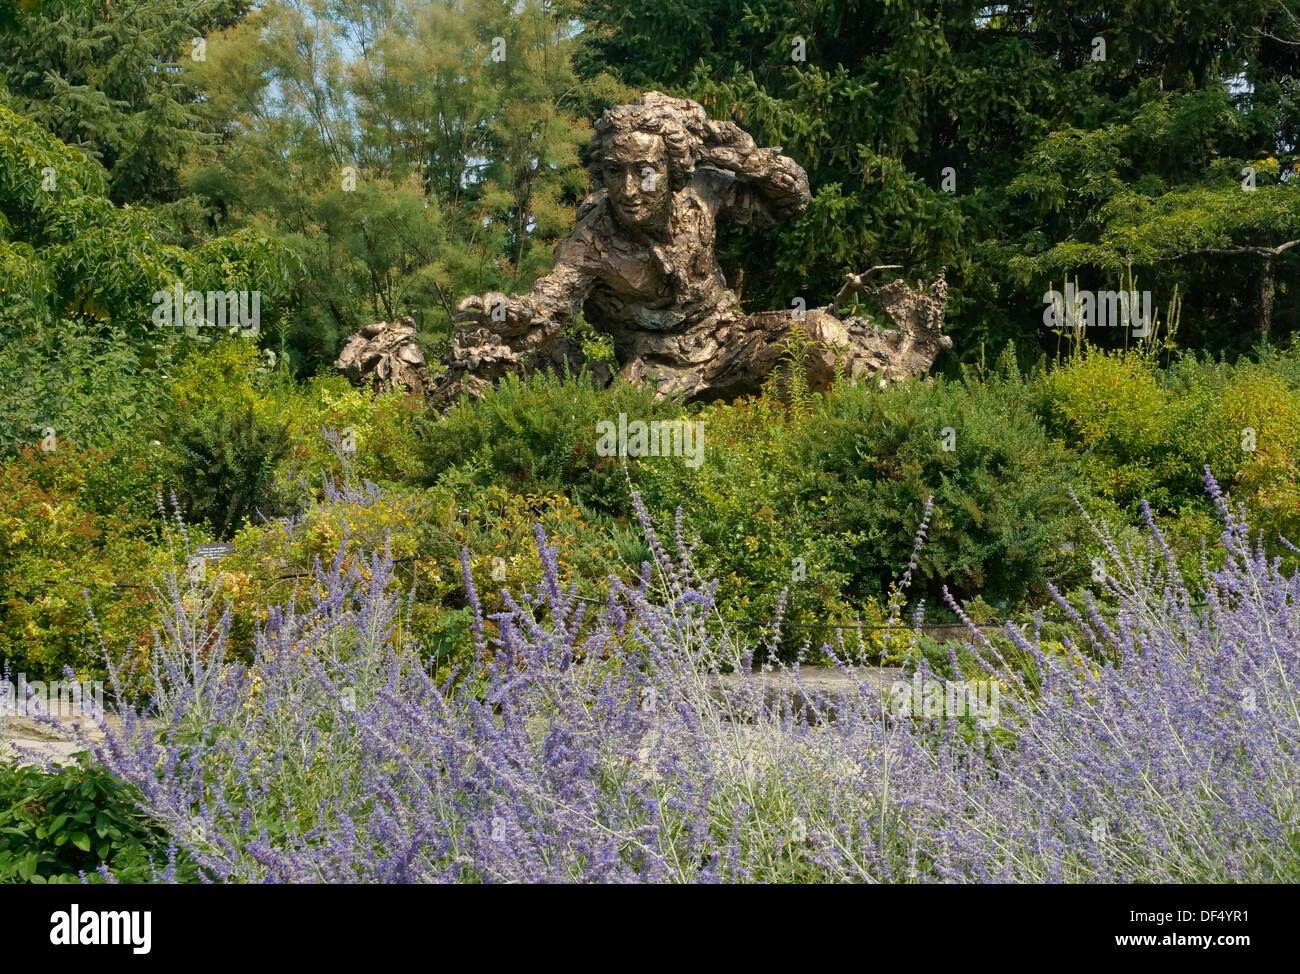 Carl Linnaeus (Carl von Linné) sculpture in the Heritage Garden at the Chicago Botanic Garden. Stock Photo